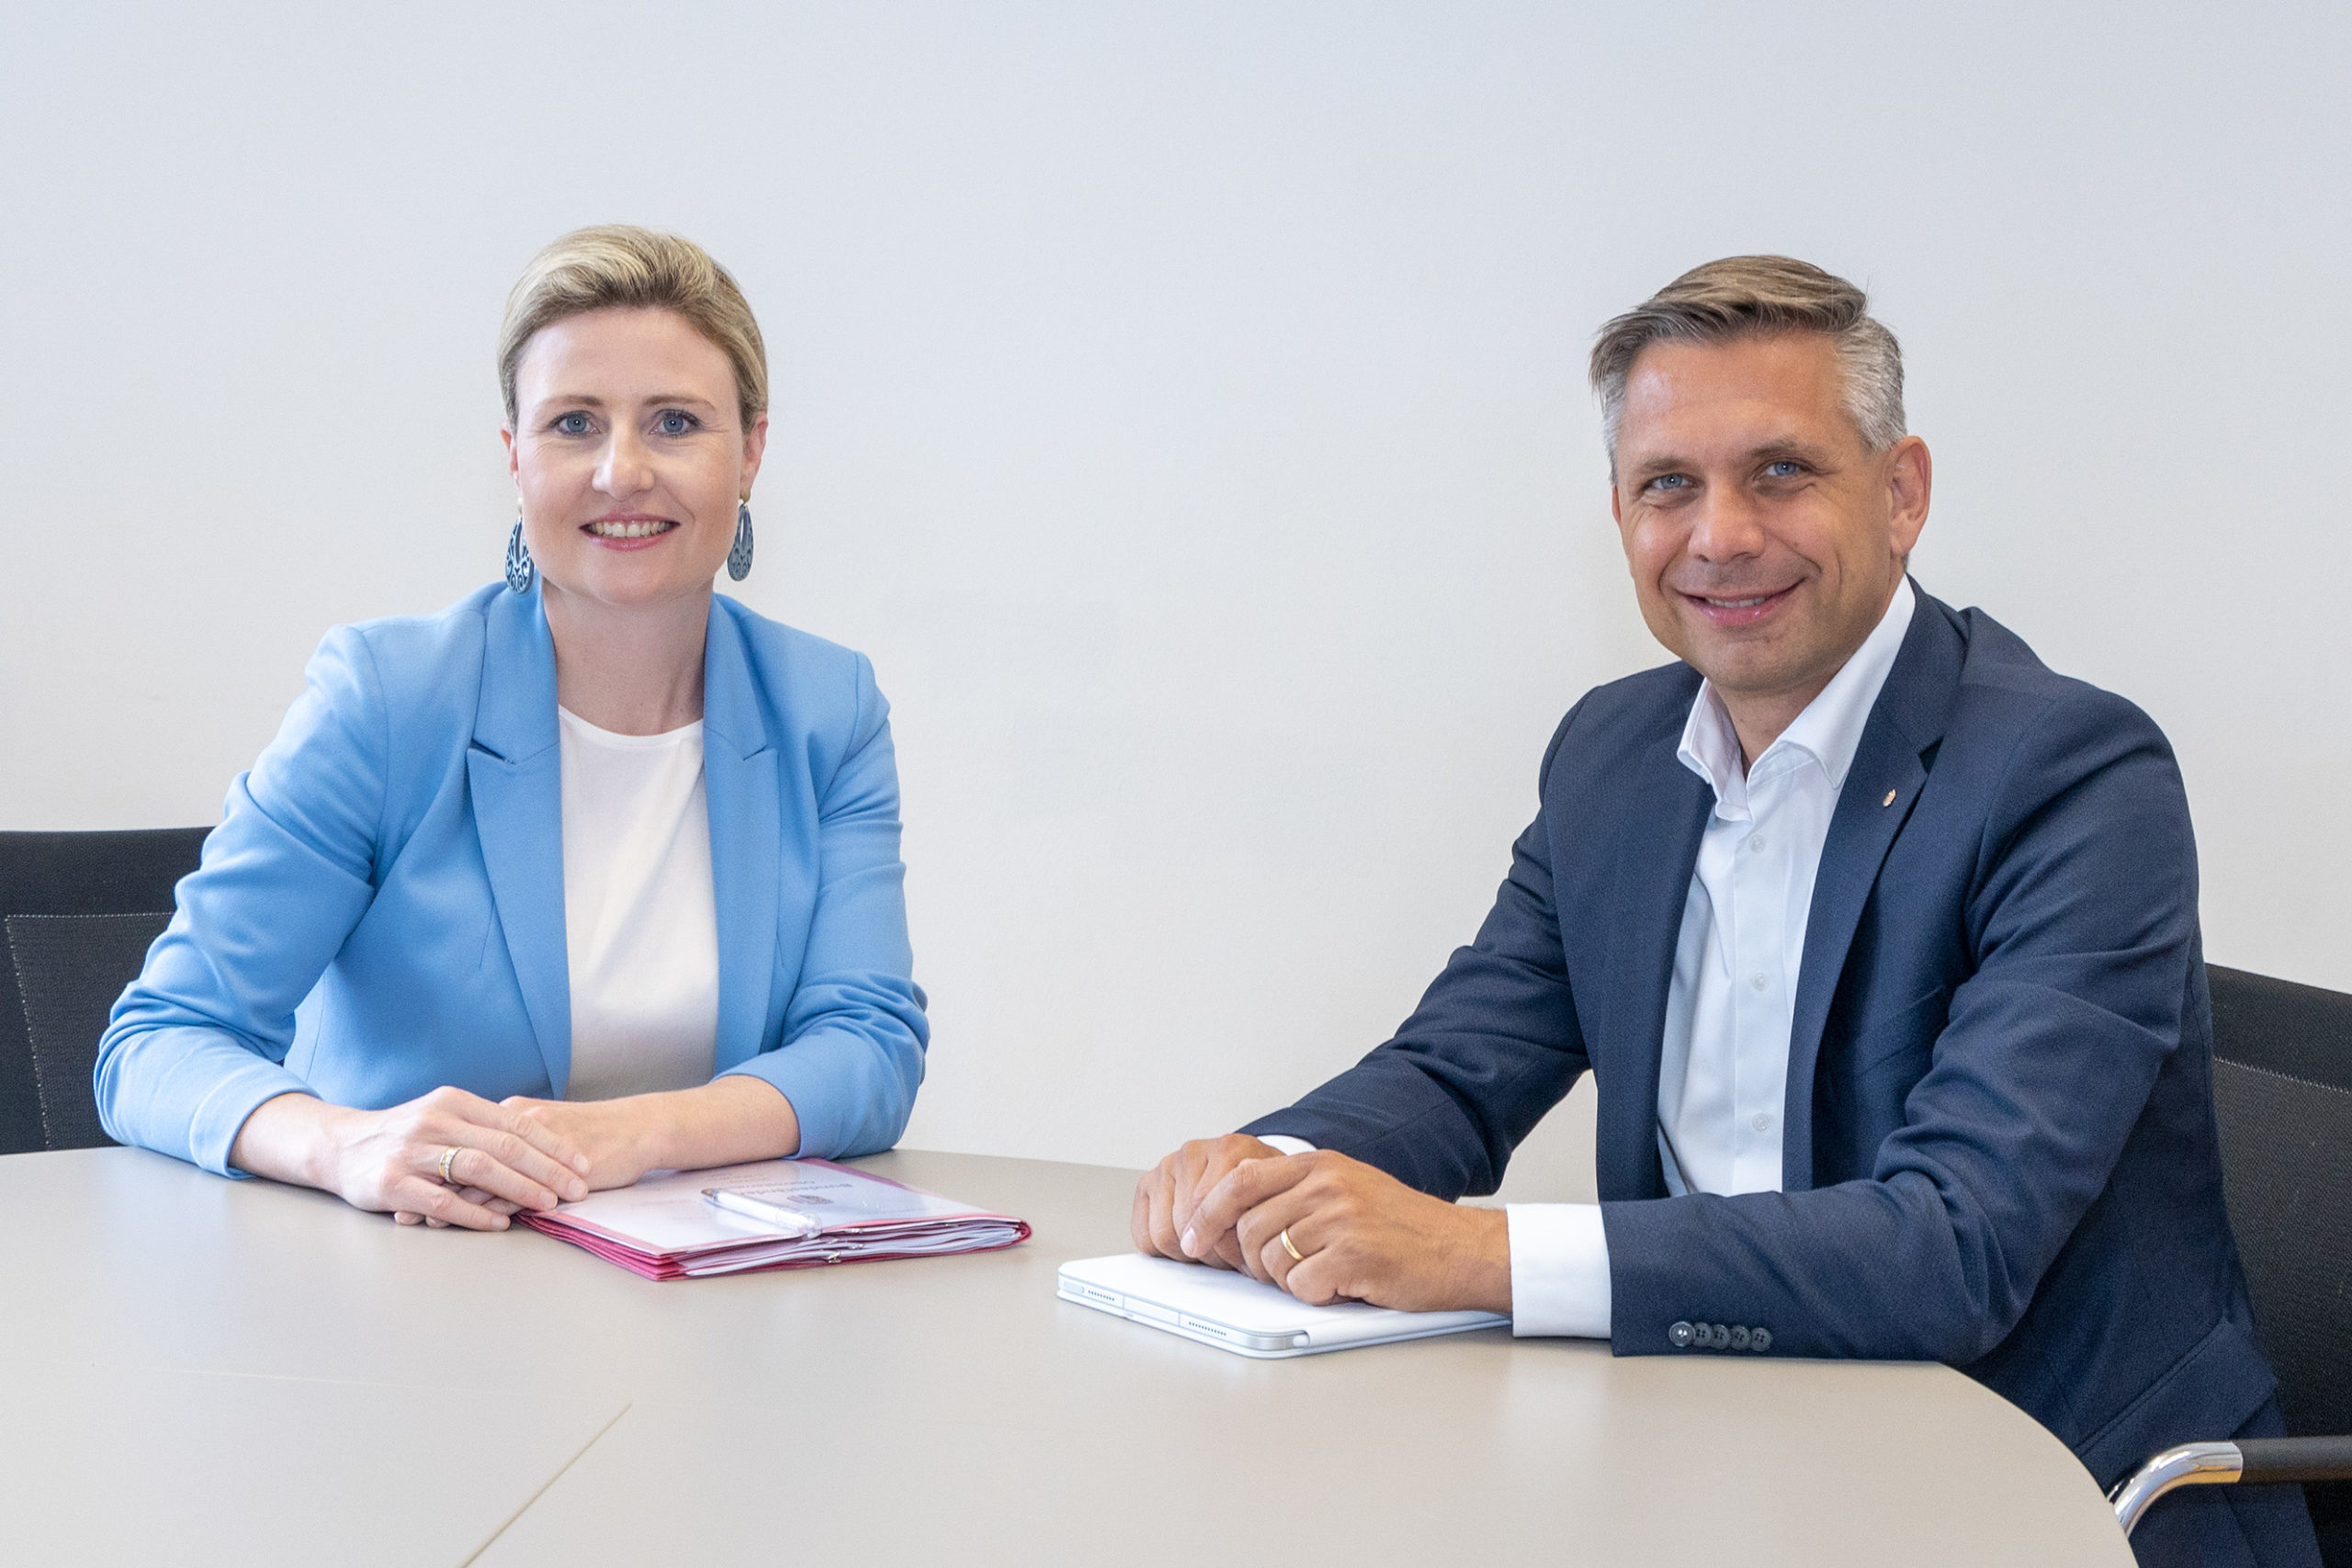 Integrations-Landesrat Hattmannsdorfer und Integrations-Ministerin Raab beim Austausch in Linz